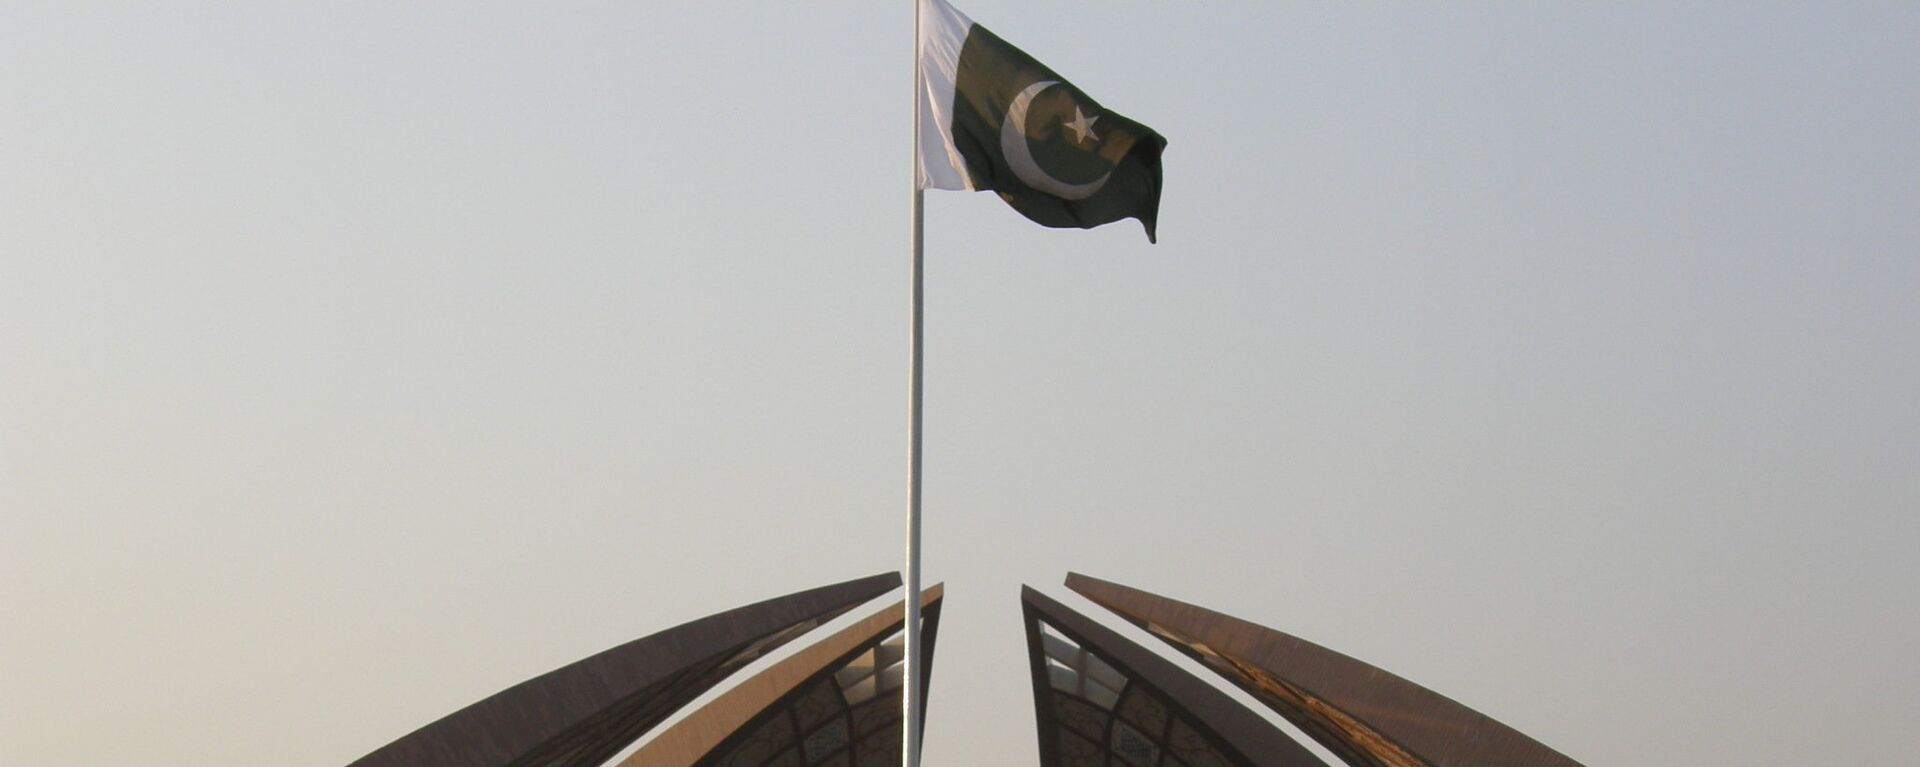 Bandera de Pakistán en Islamabad - Sputnik Mundo, 1920, 29.03.2021